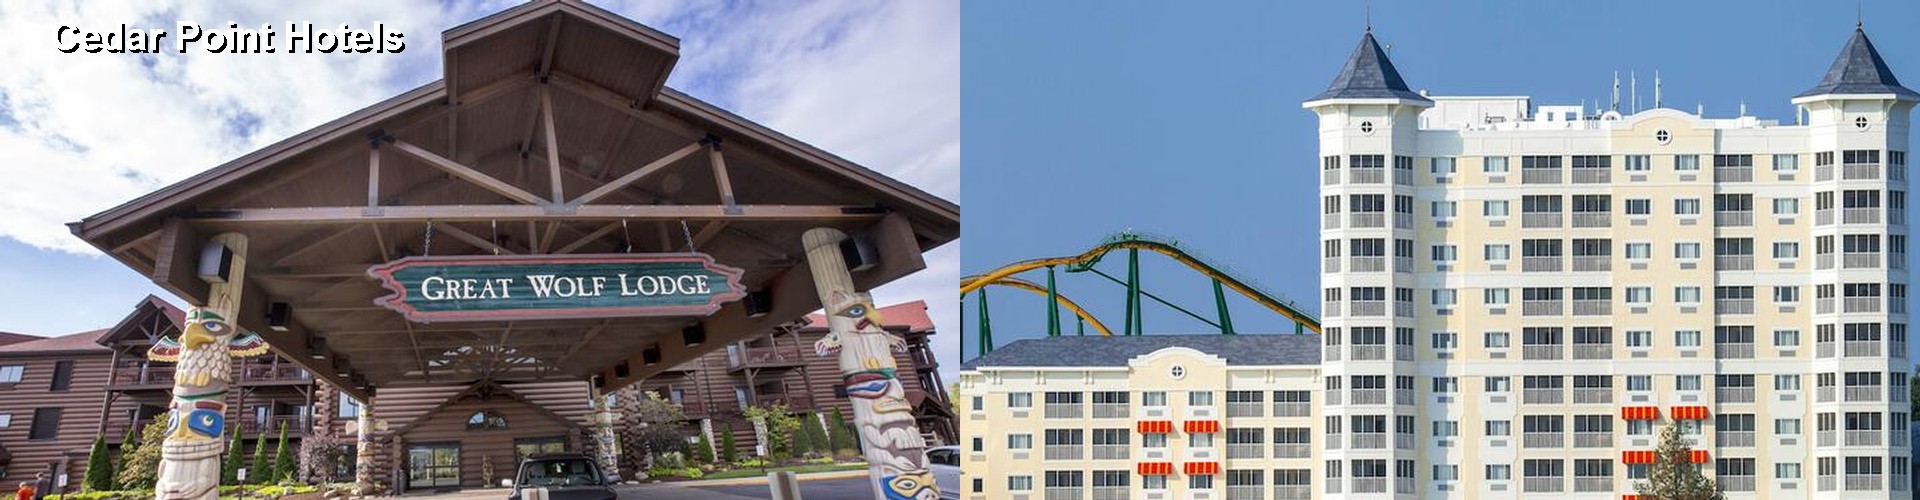 3 Best Hotels near Cedar Point